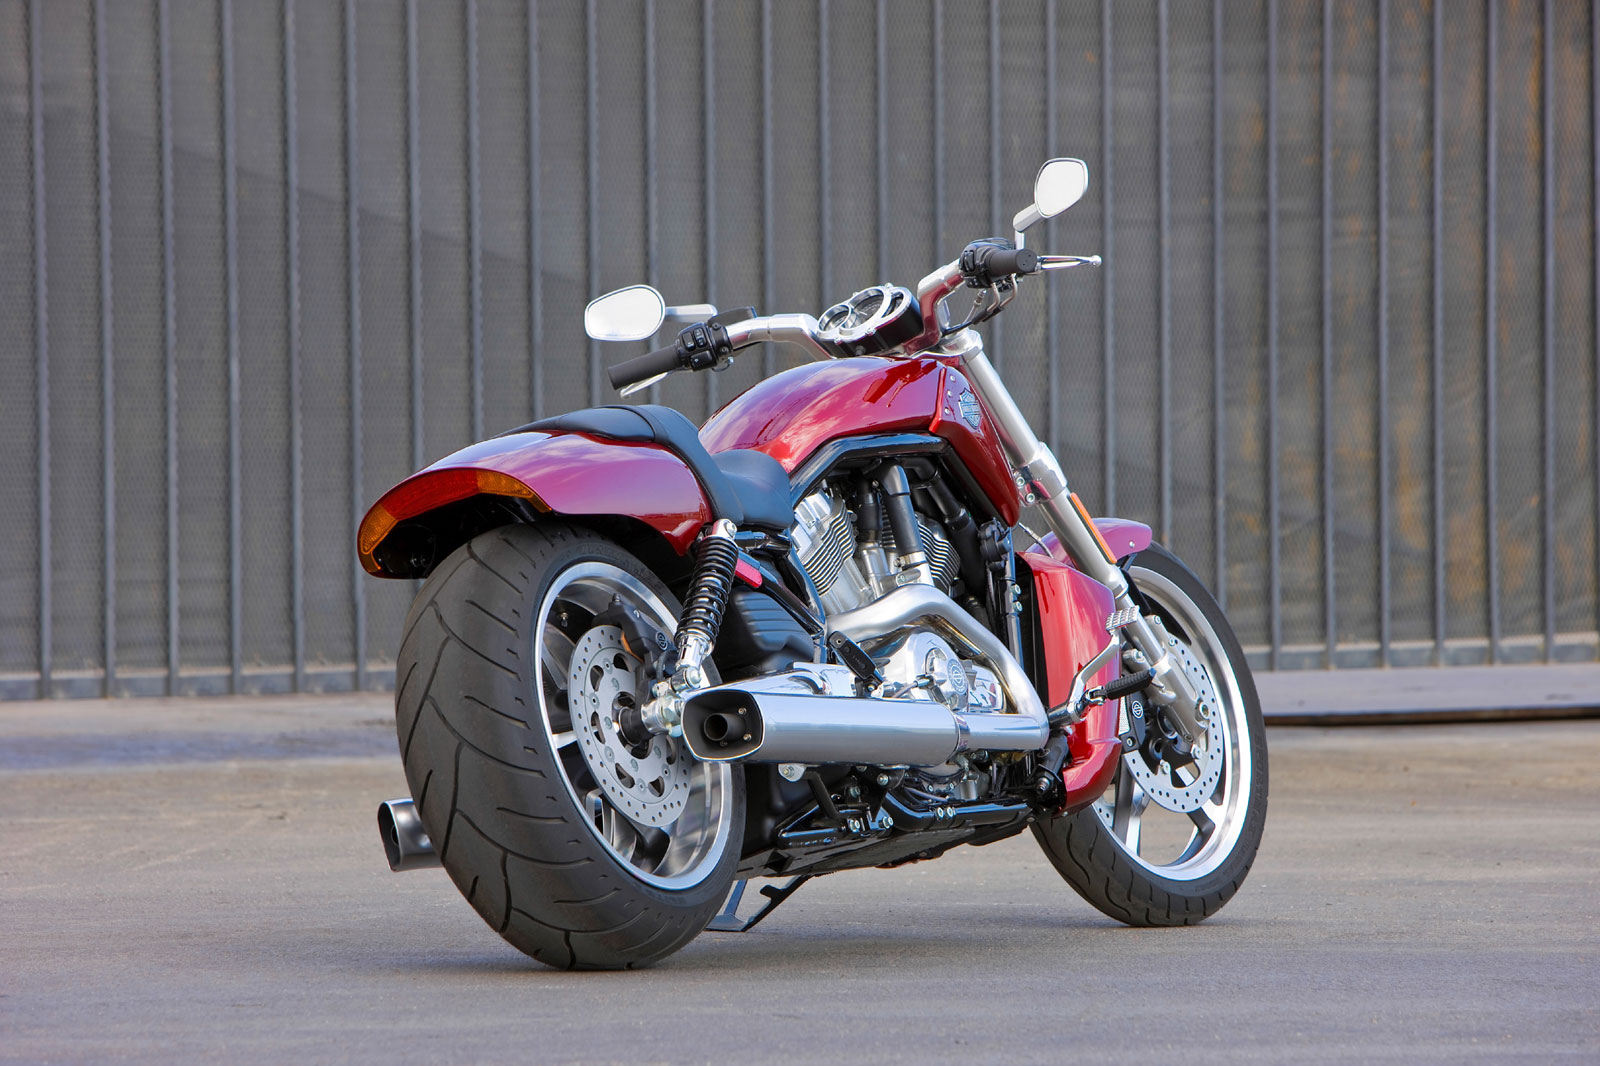 2021 Harley-Davidson CVO Street Glide Guide • Total Motorcycle